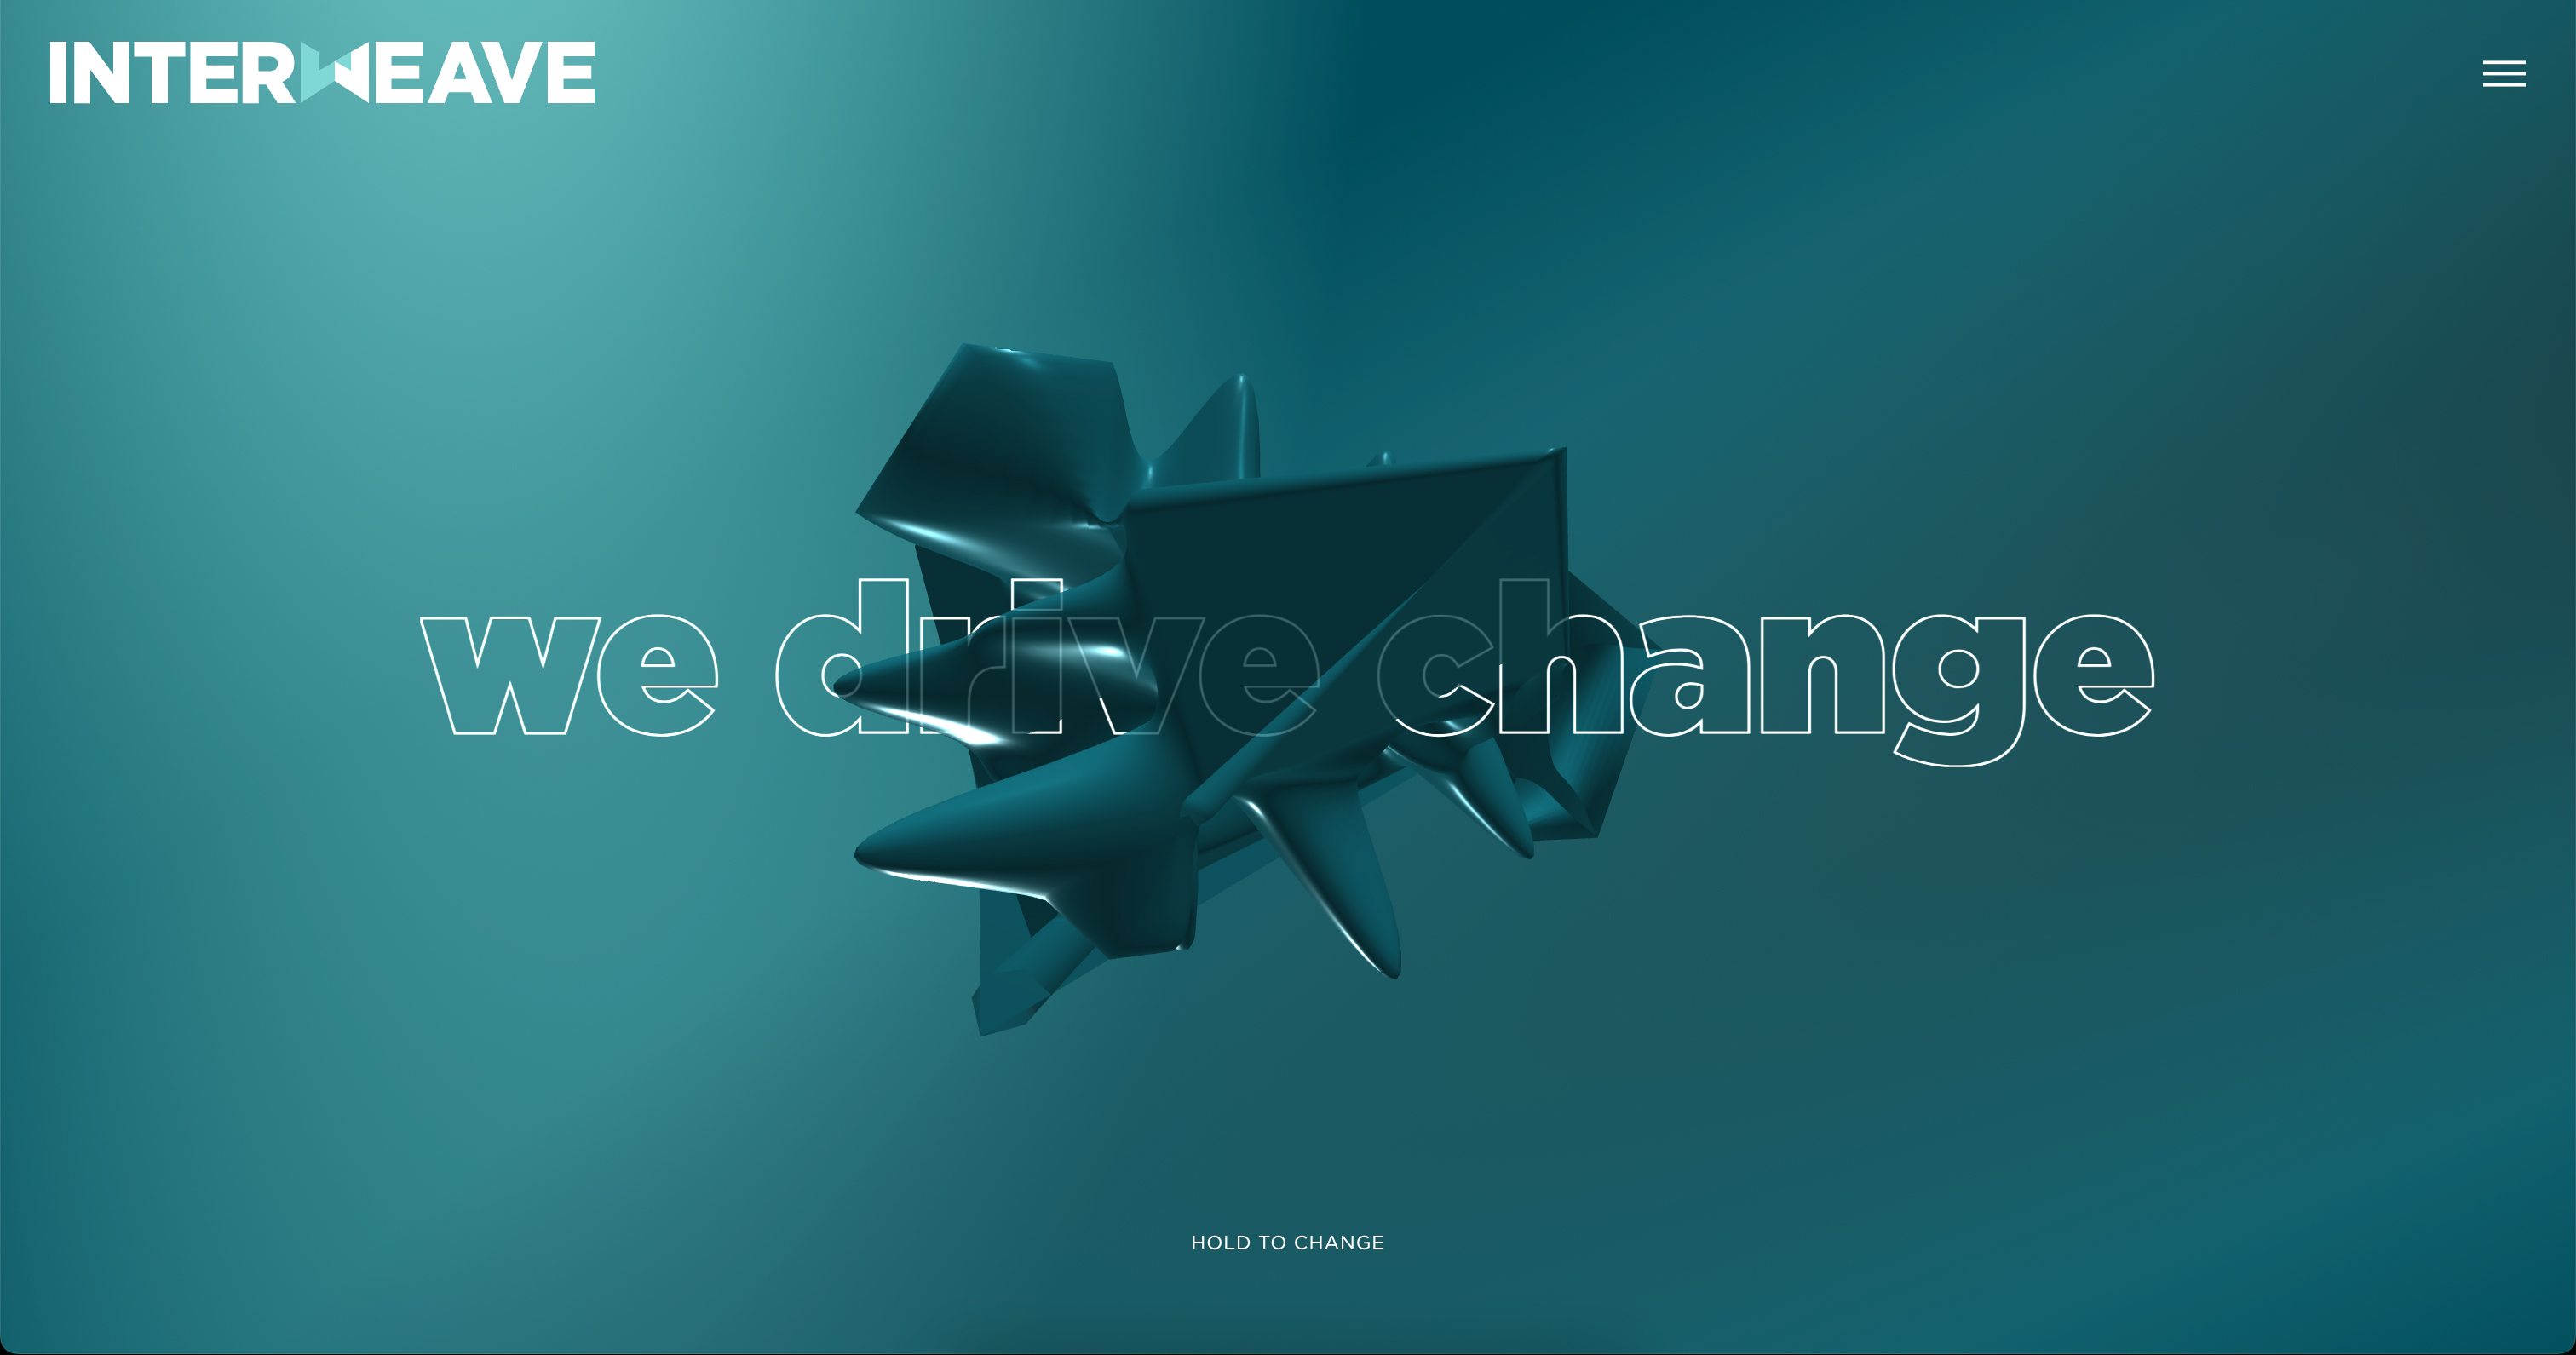 Interweave agency design agencies 404 pages